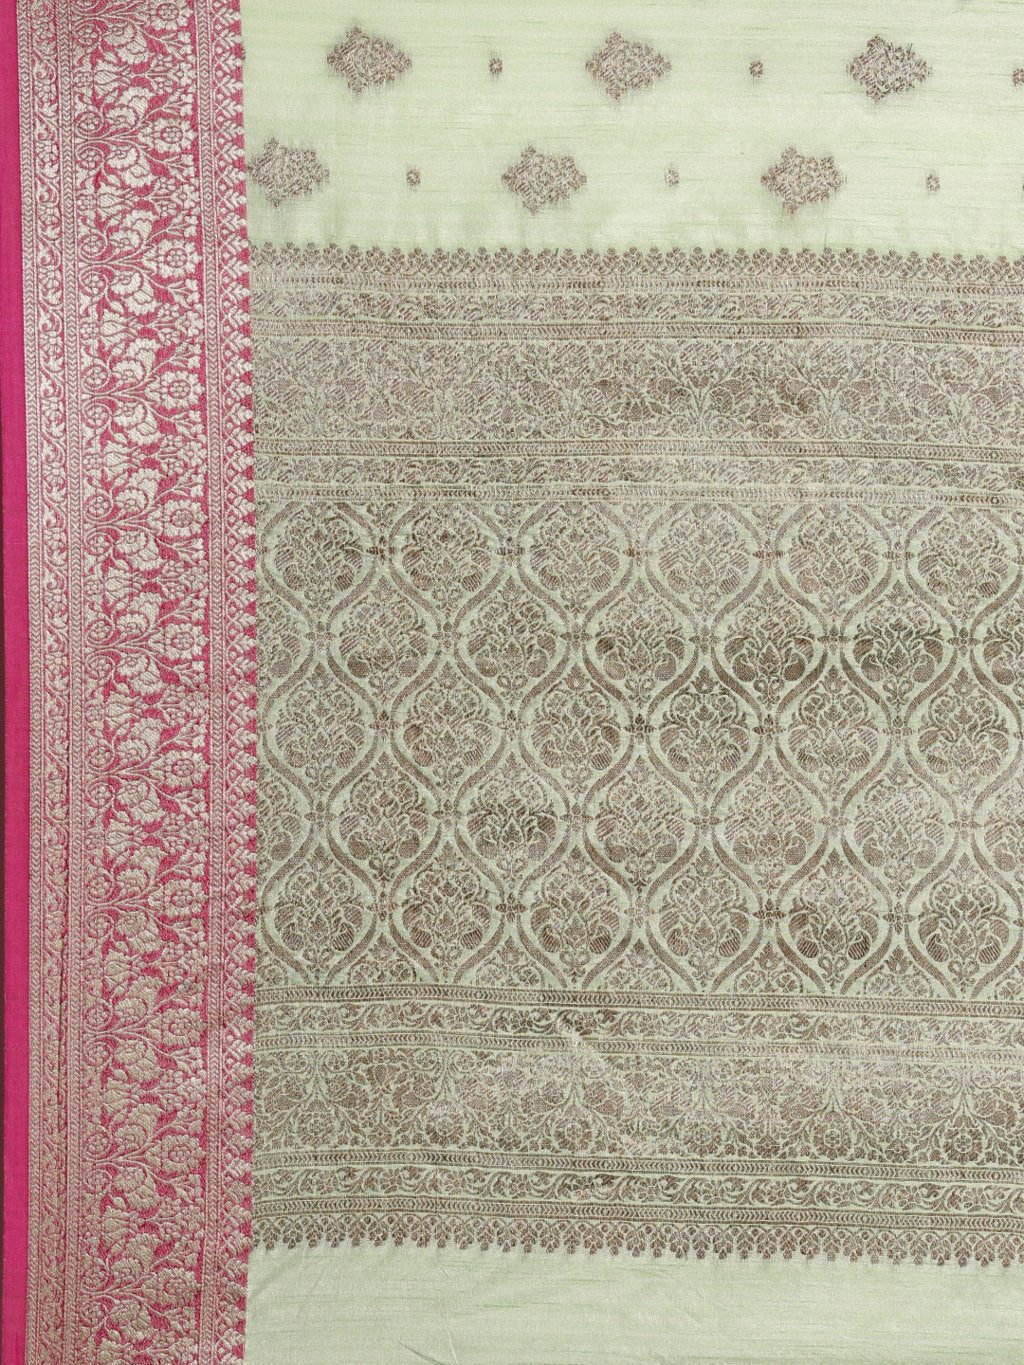 Women's Light Green Cotton Handloom Woven Work Traditional Saree - Sangam Prints